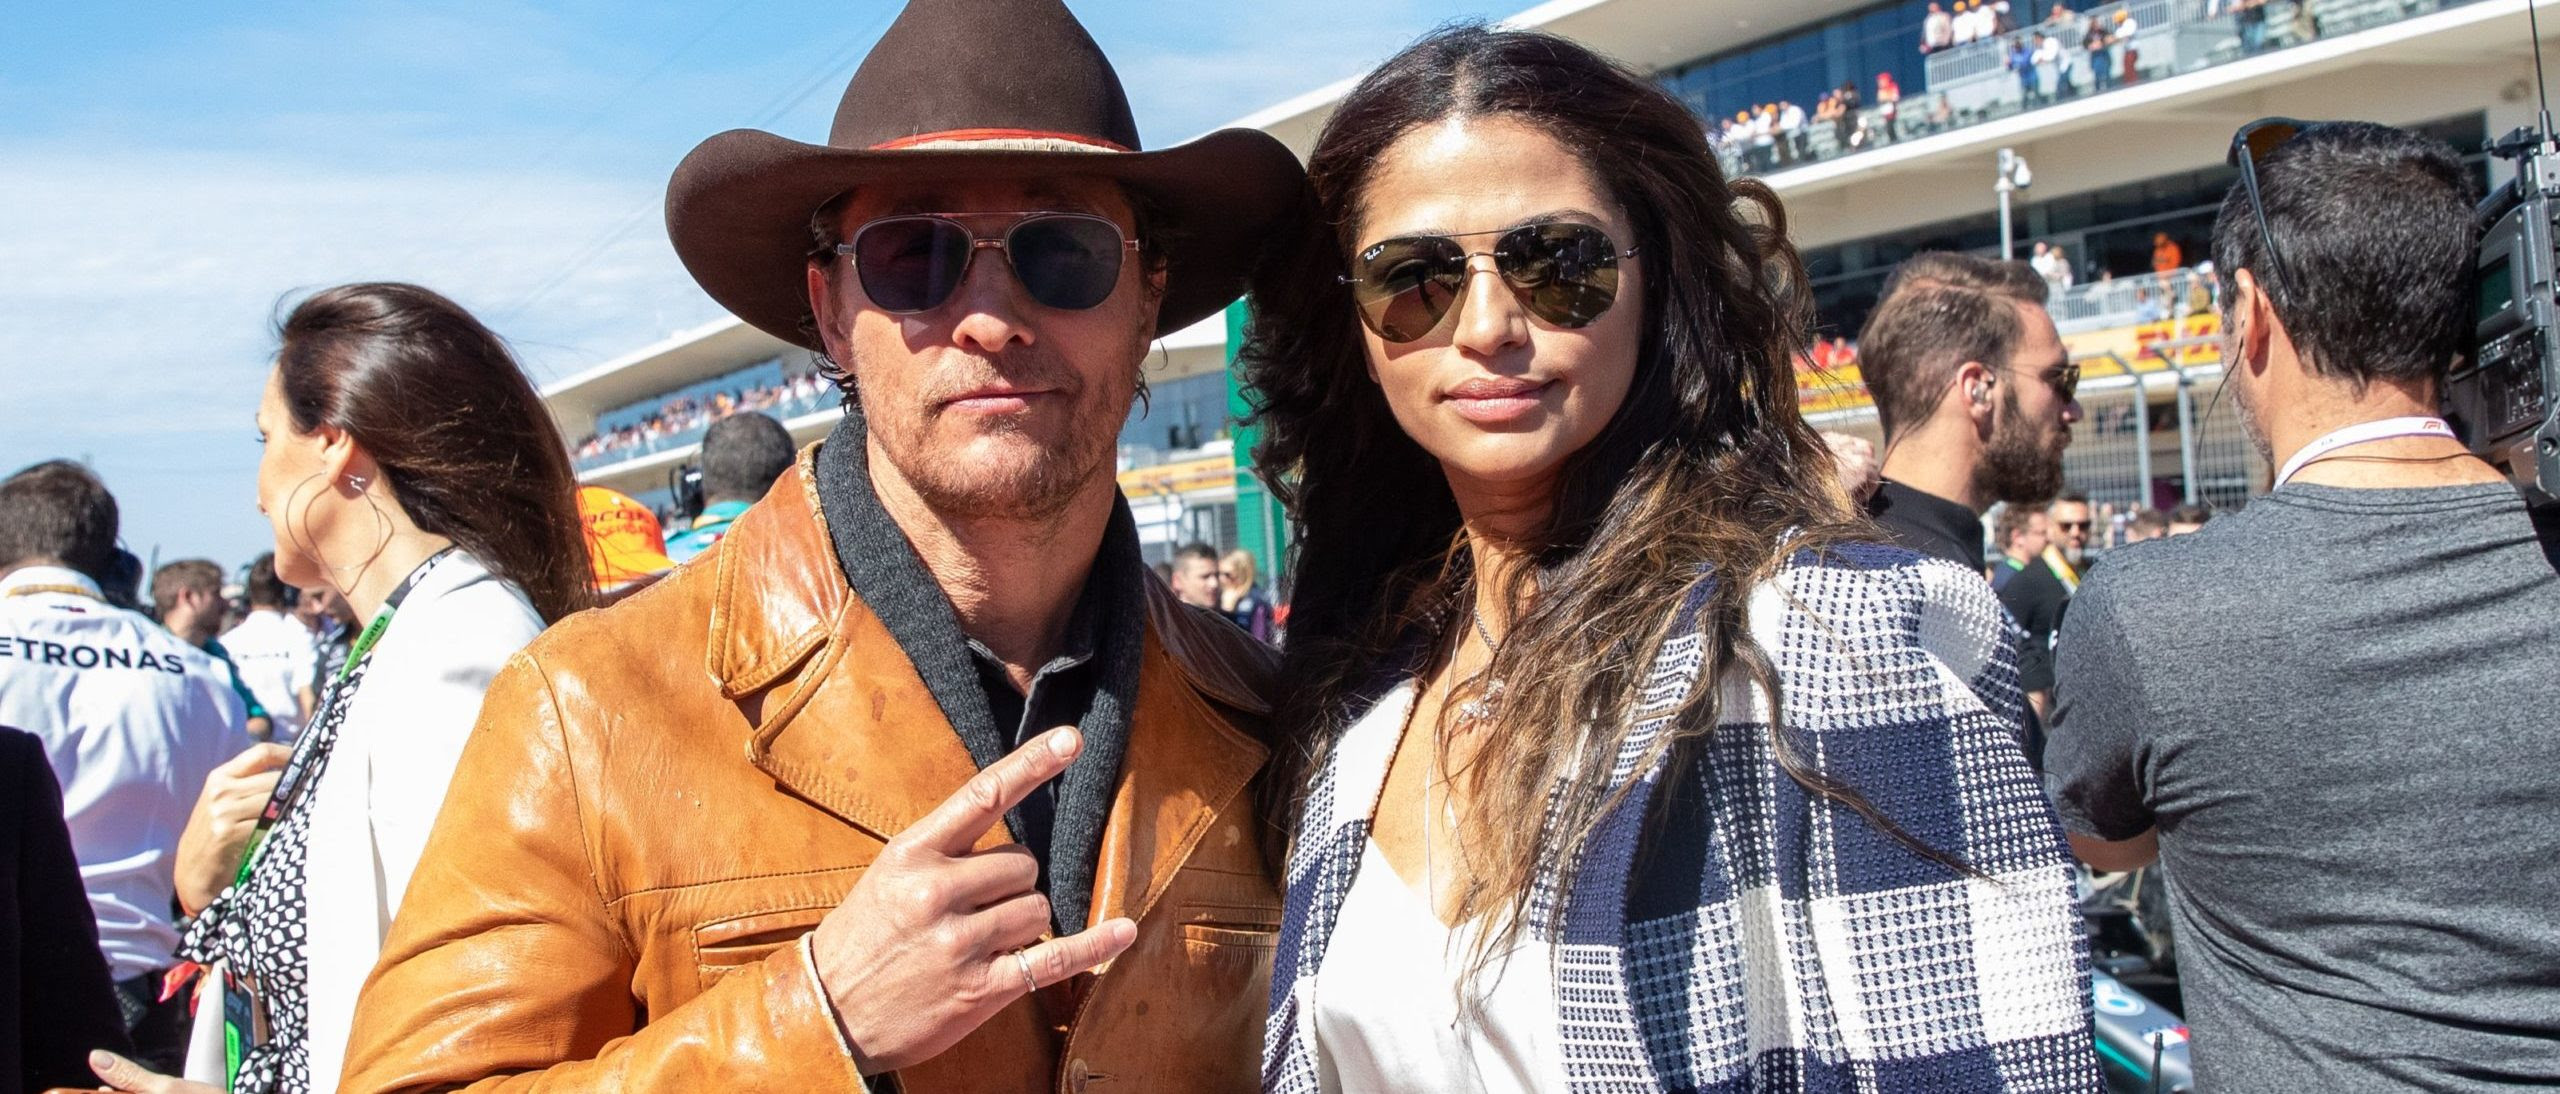 Camila Alves McConaughey Explains Why She Prefers To Raise Her Family In Texas Over Hollywood